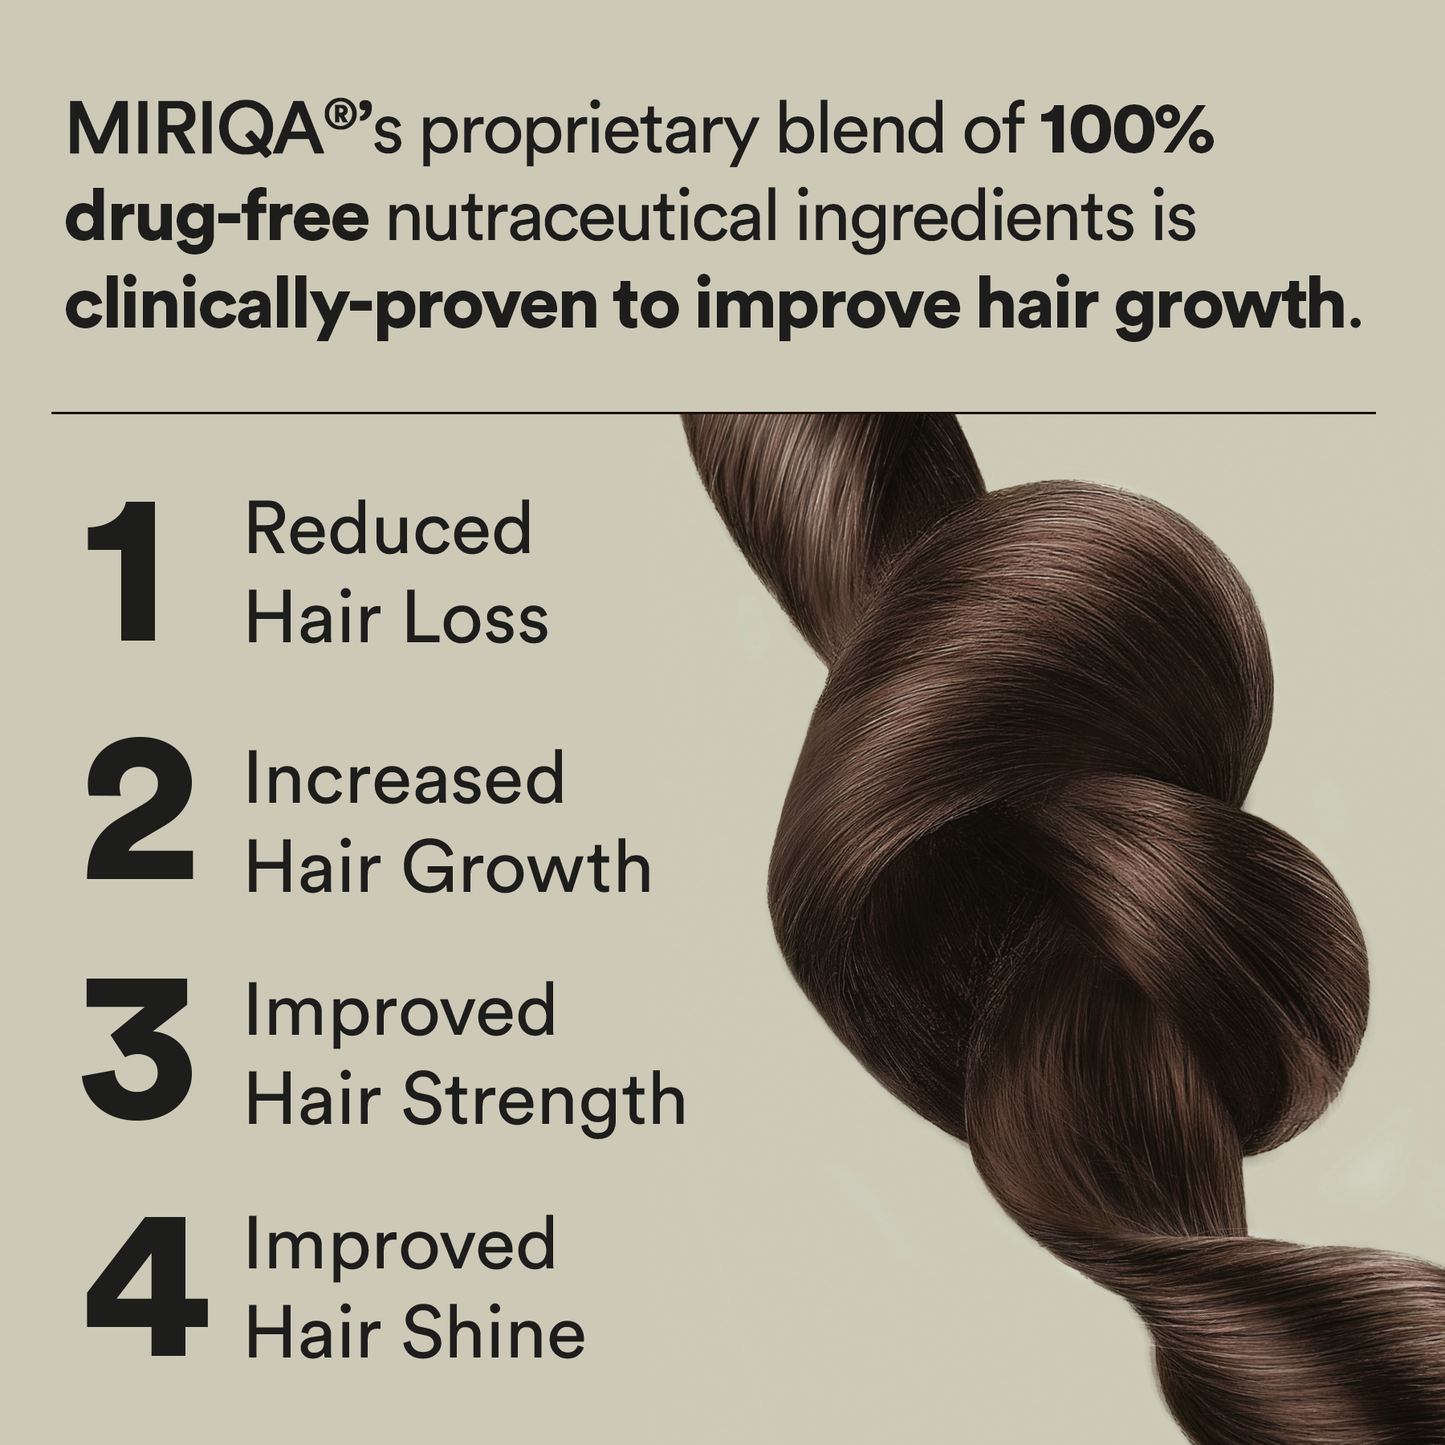 MIRIQA® Professional Hair Nutrition Supplement (3 Box Bundle)